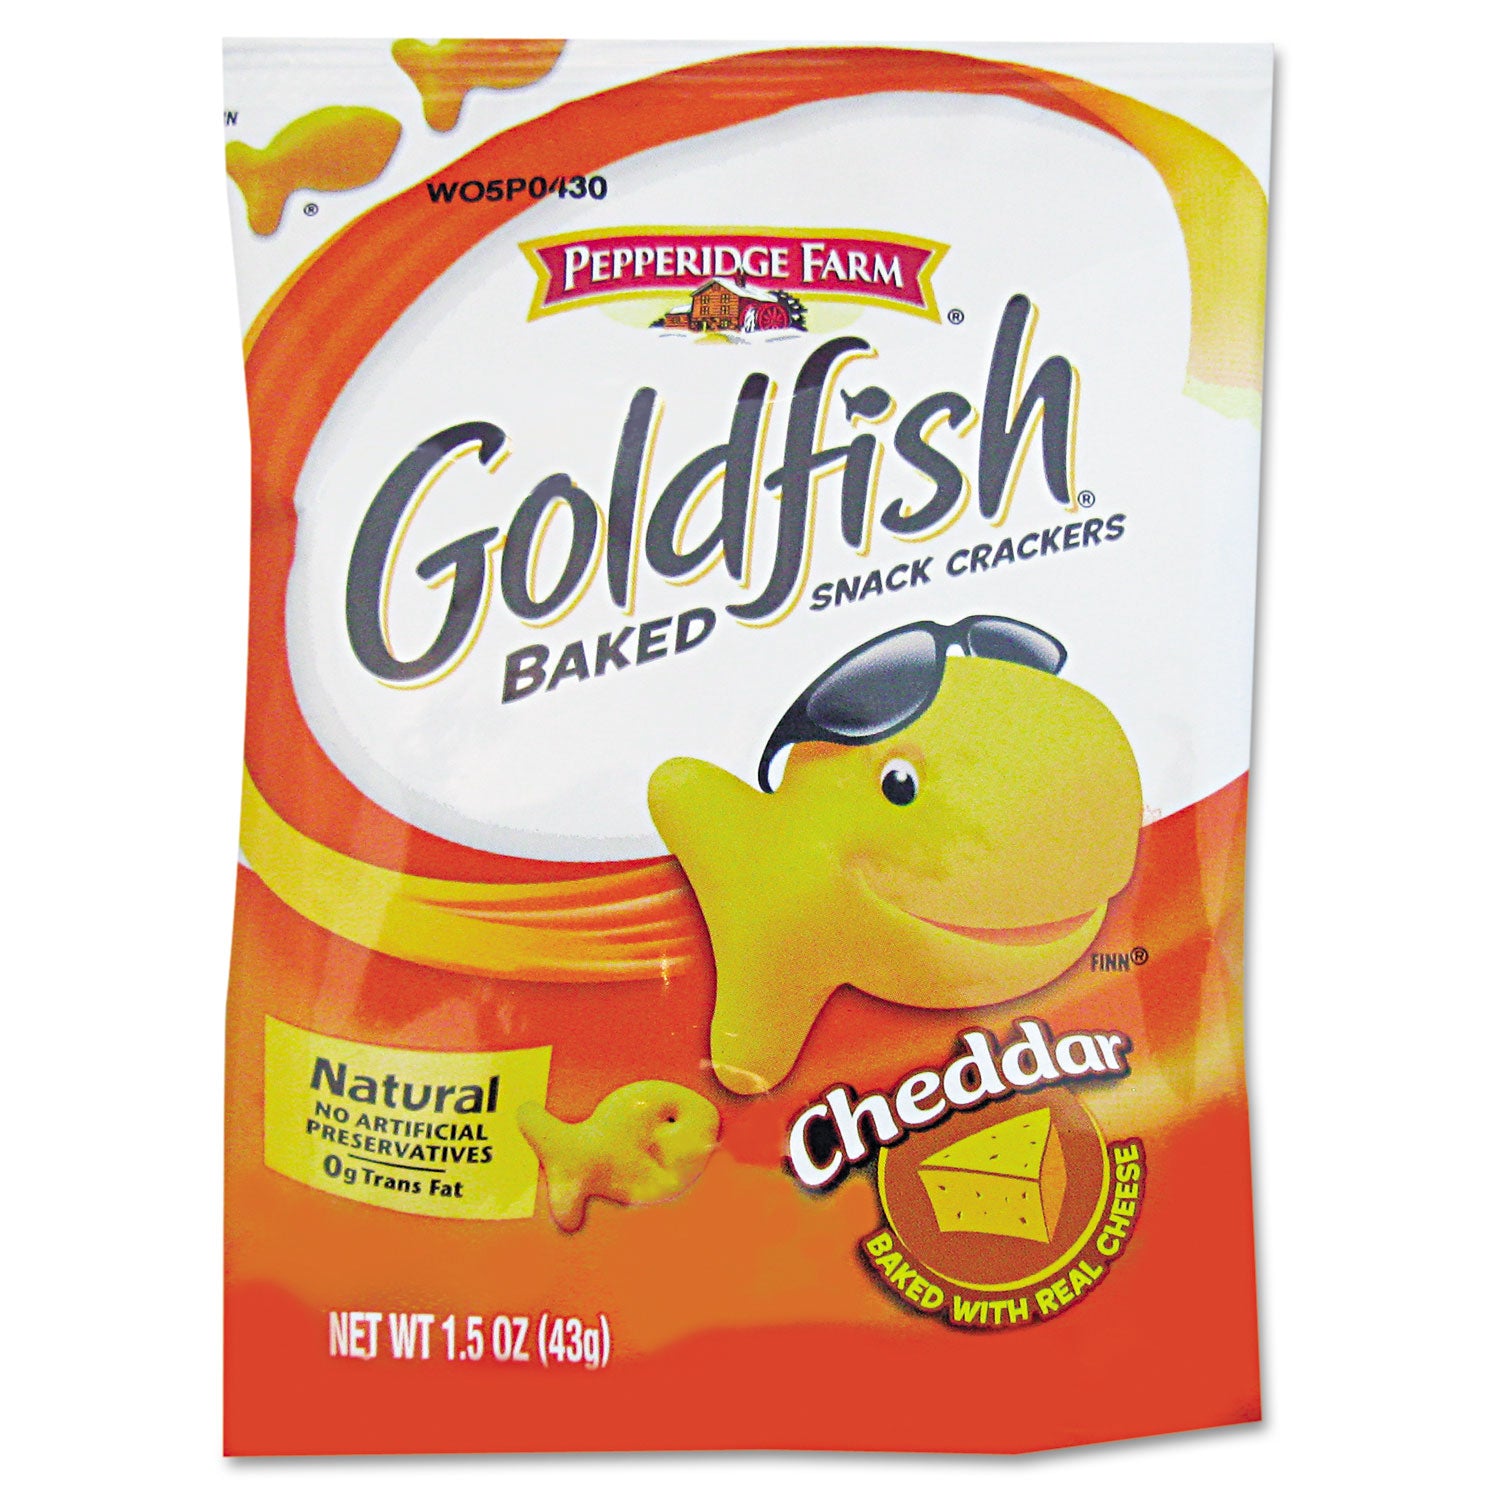 goldfish-crackers-cheddar-single-serve-snack-15oz-bag-72-carton_ppf13539 - 1